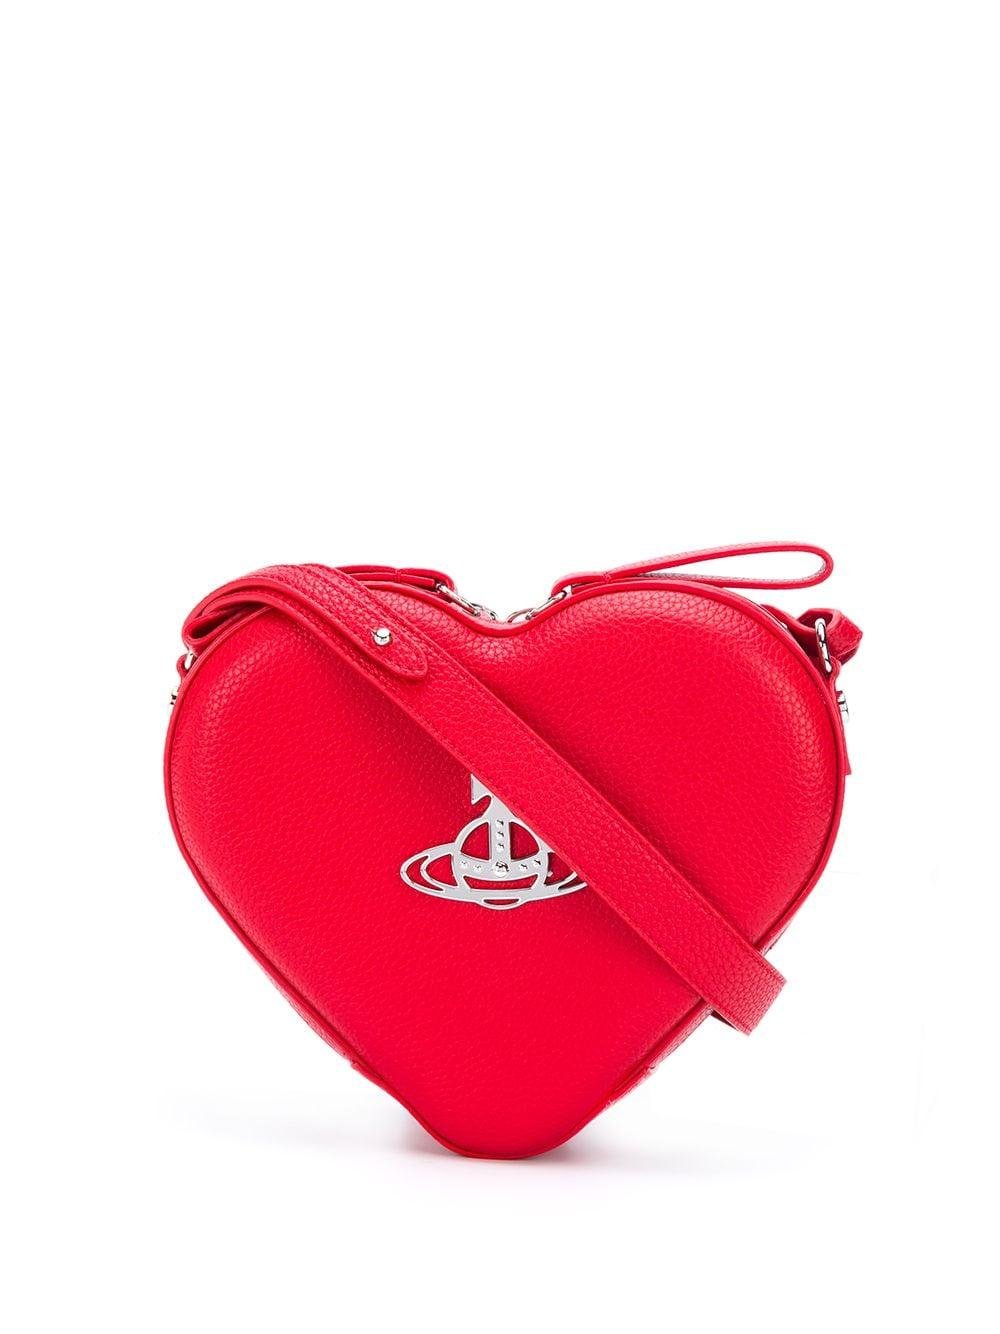 Vivienne Westwood Johanna Black Patent Heart Cross-body Bag